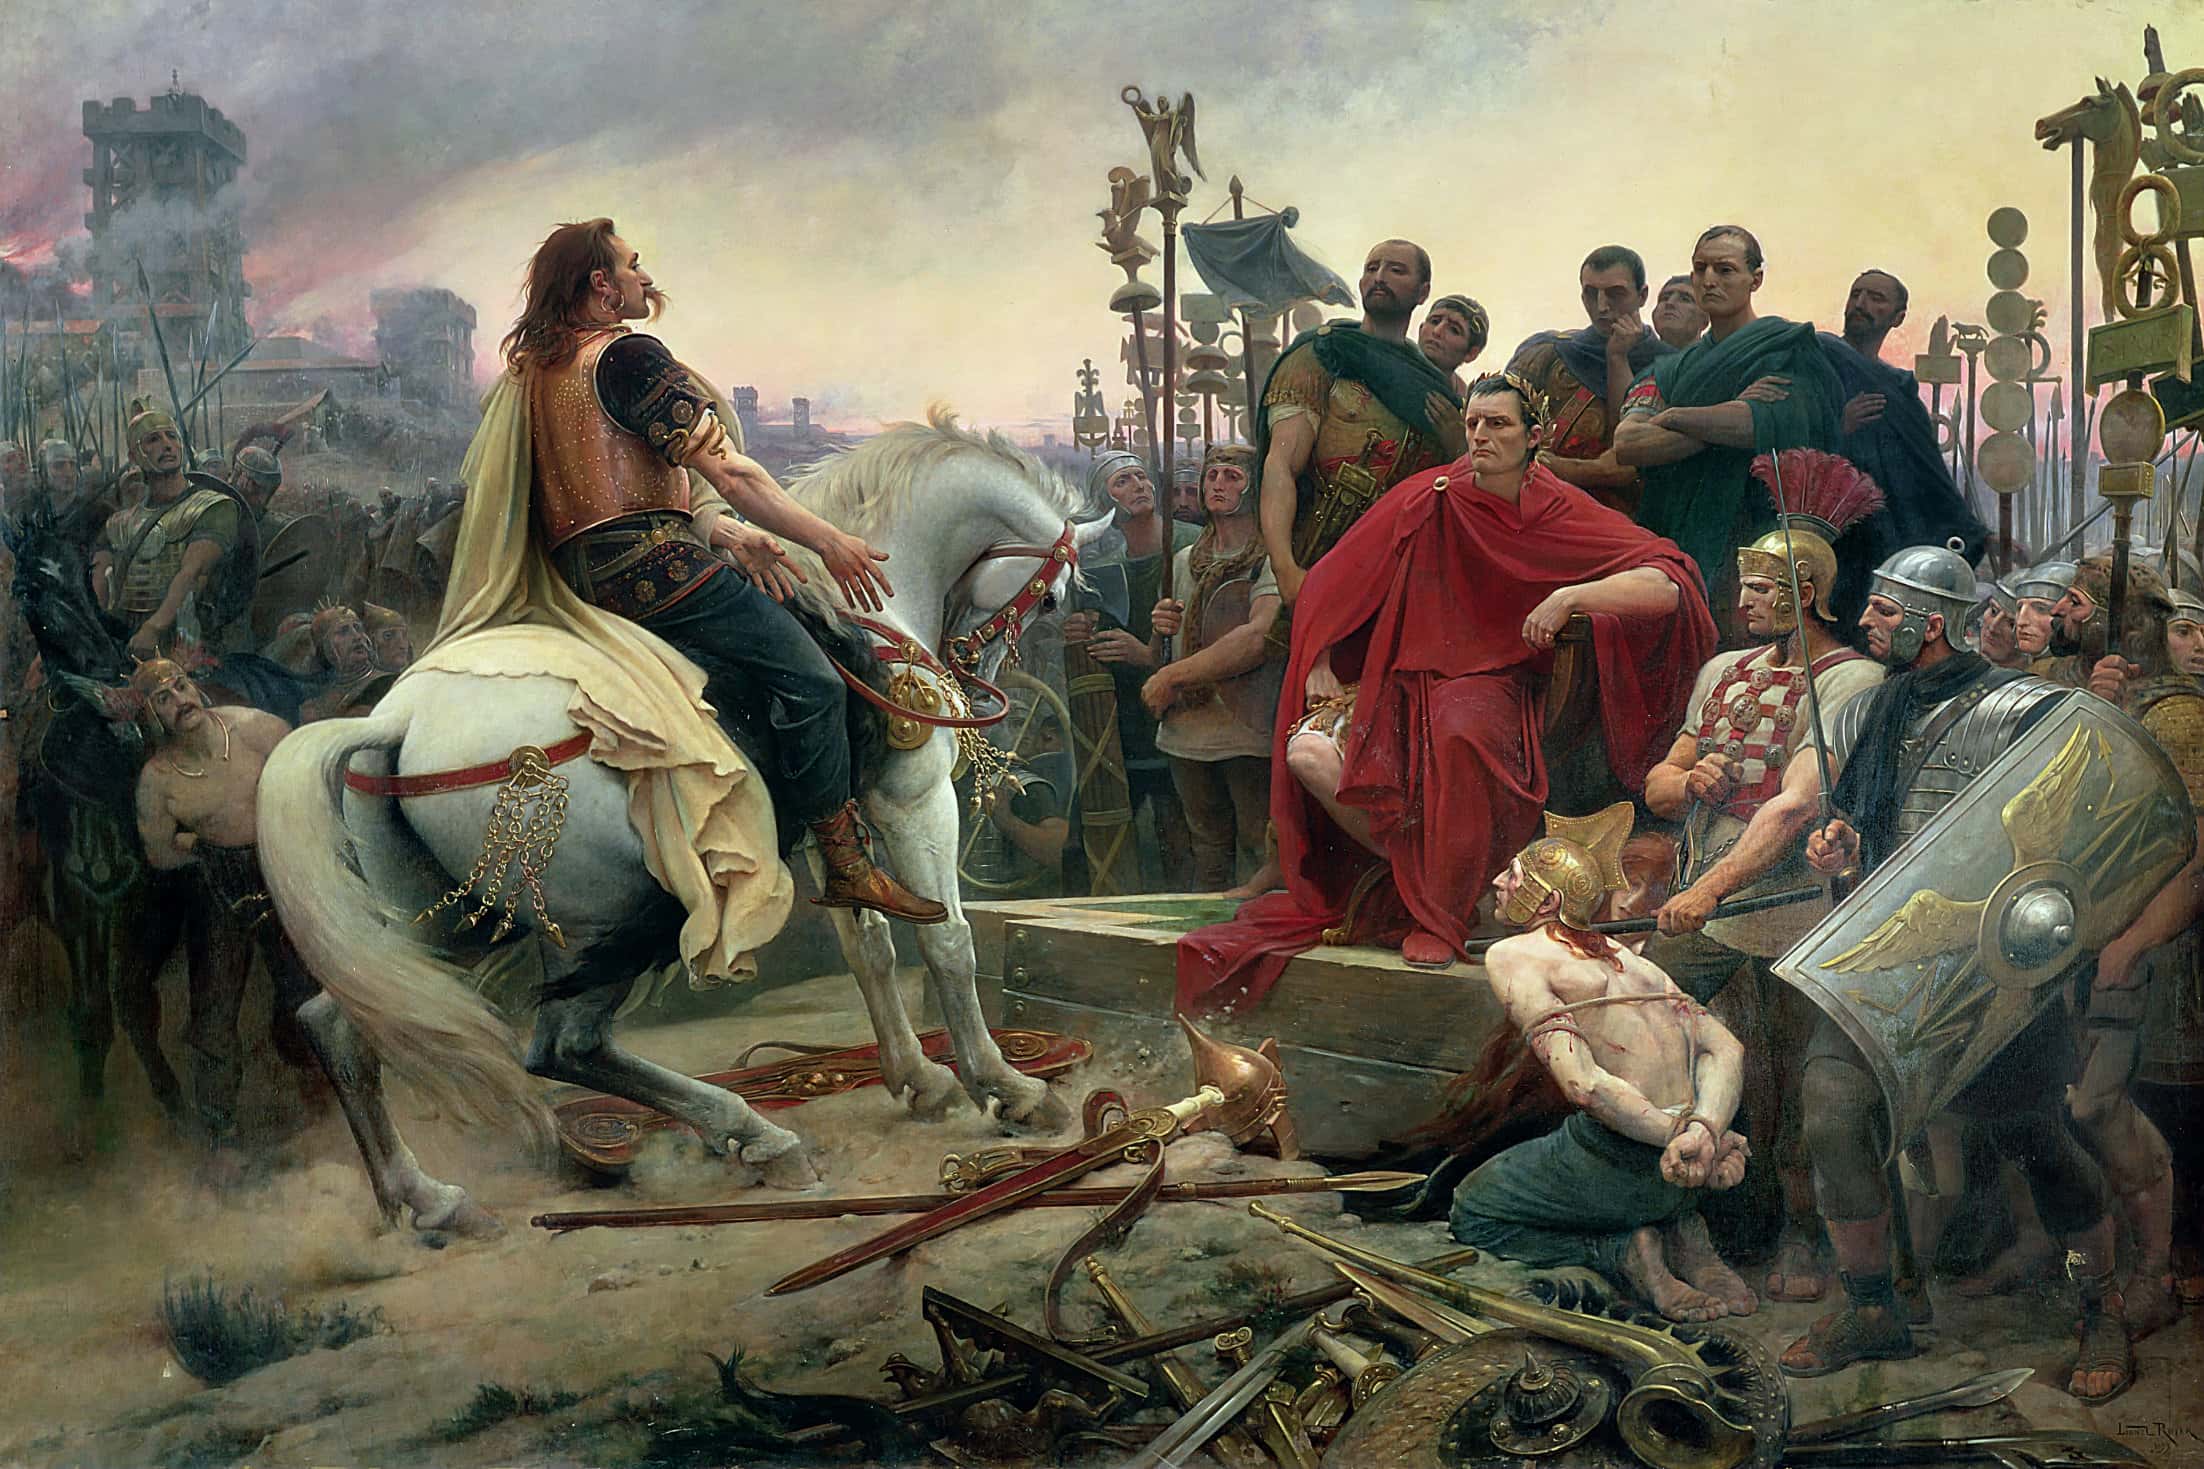 Were the Celts Just Primitive Barbarians?